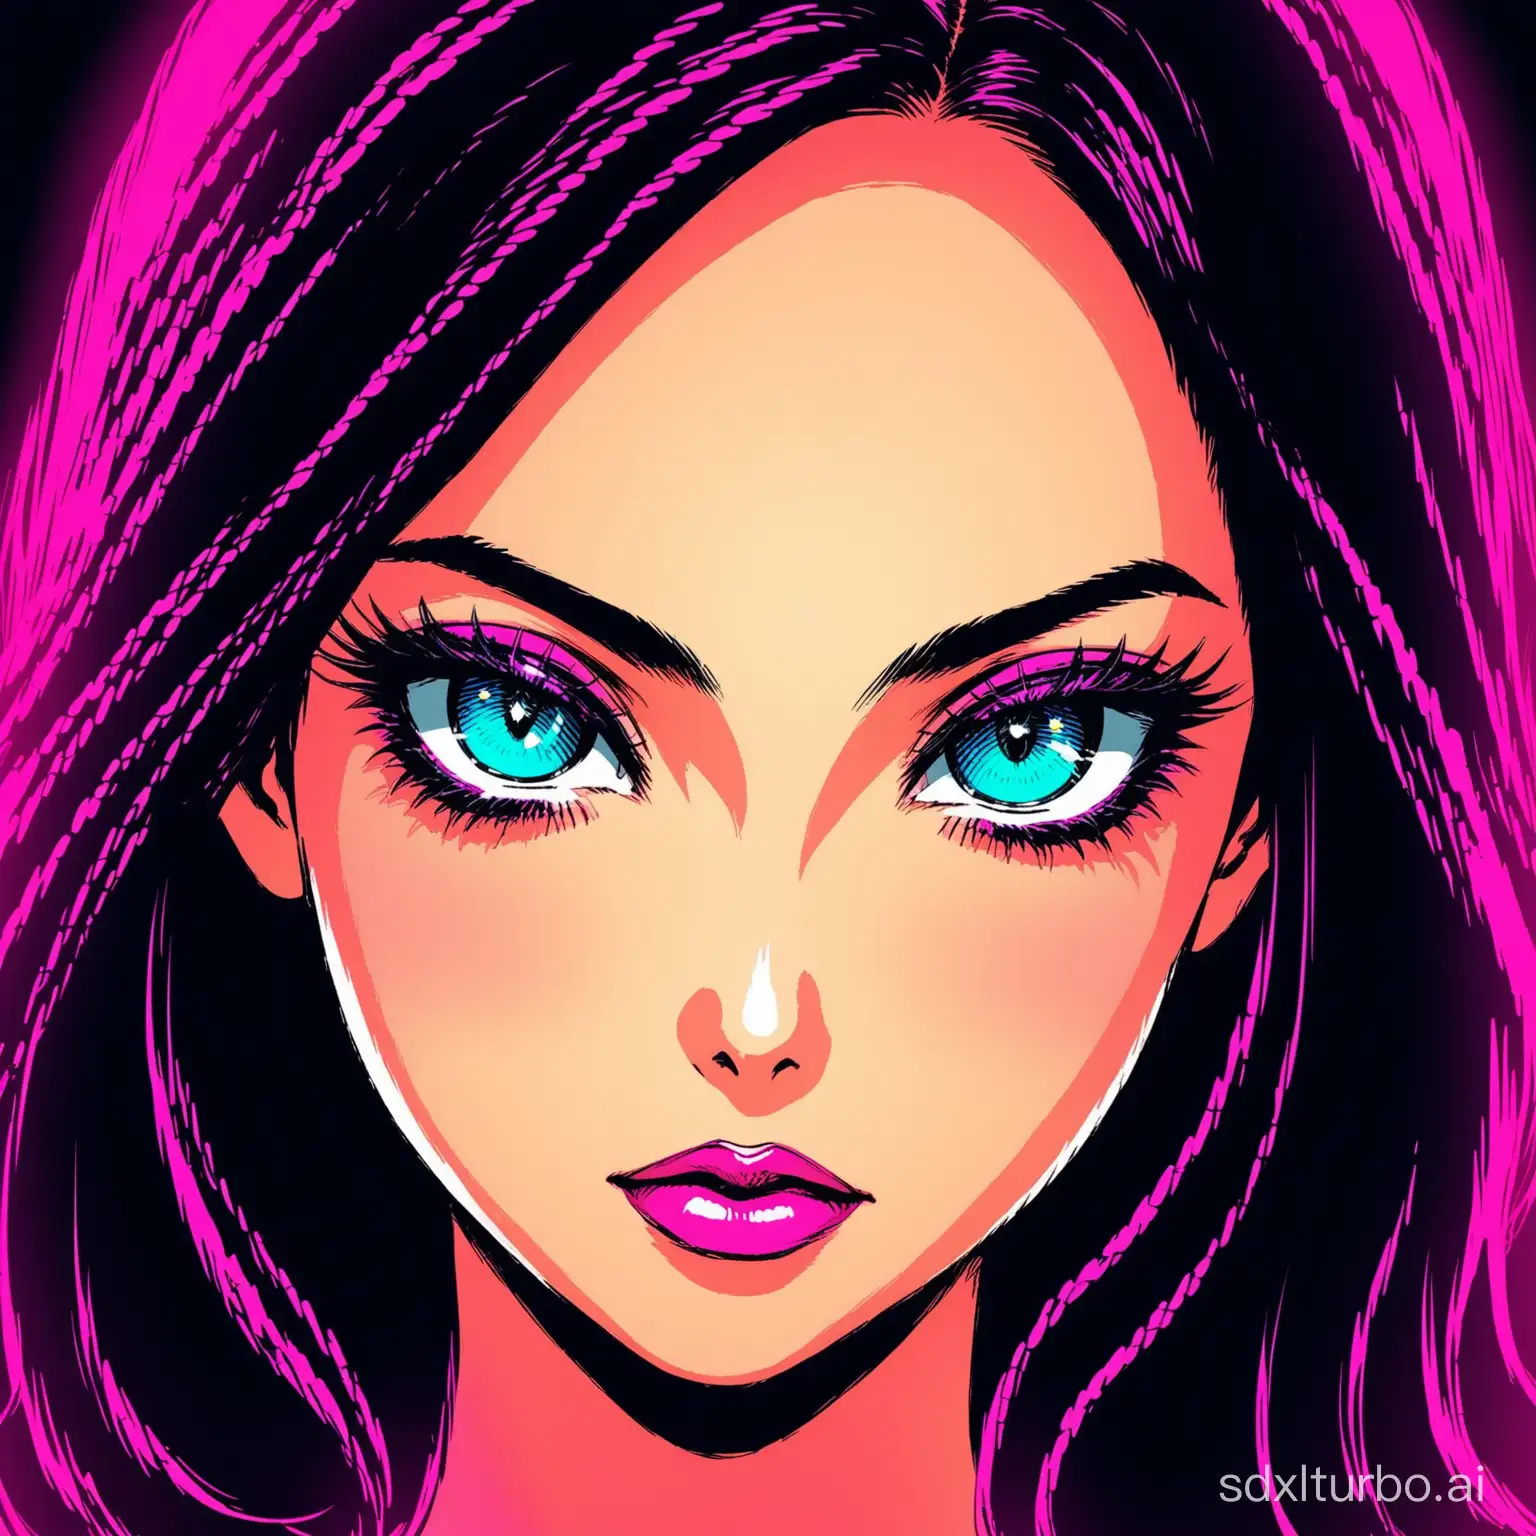 Neon-Pop-Art-Portrait-of-a-Woman-with-Dark-Comic-Style-Eyes